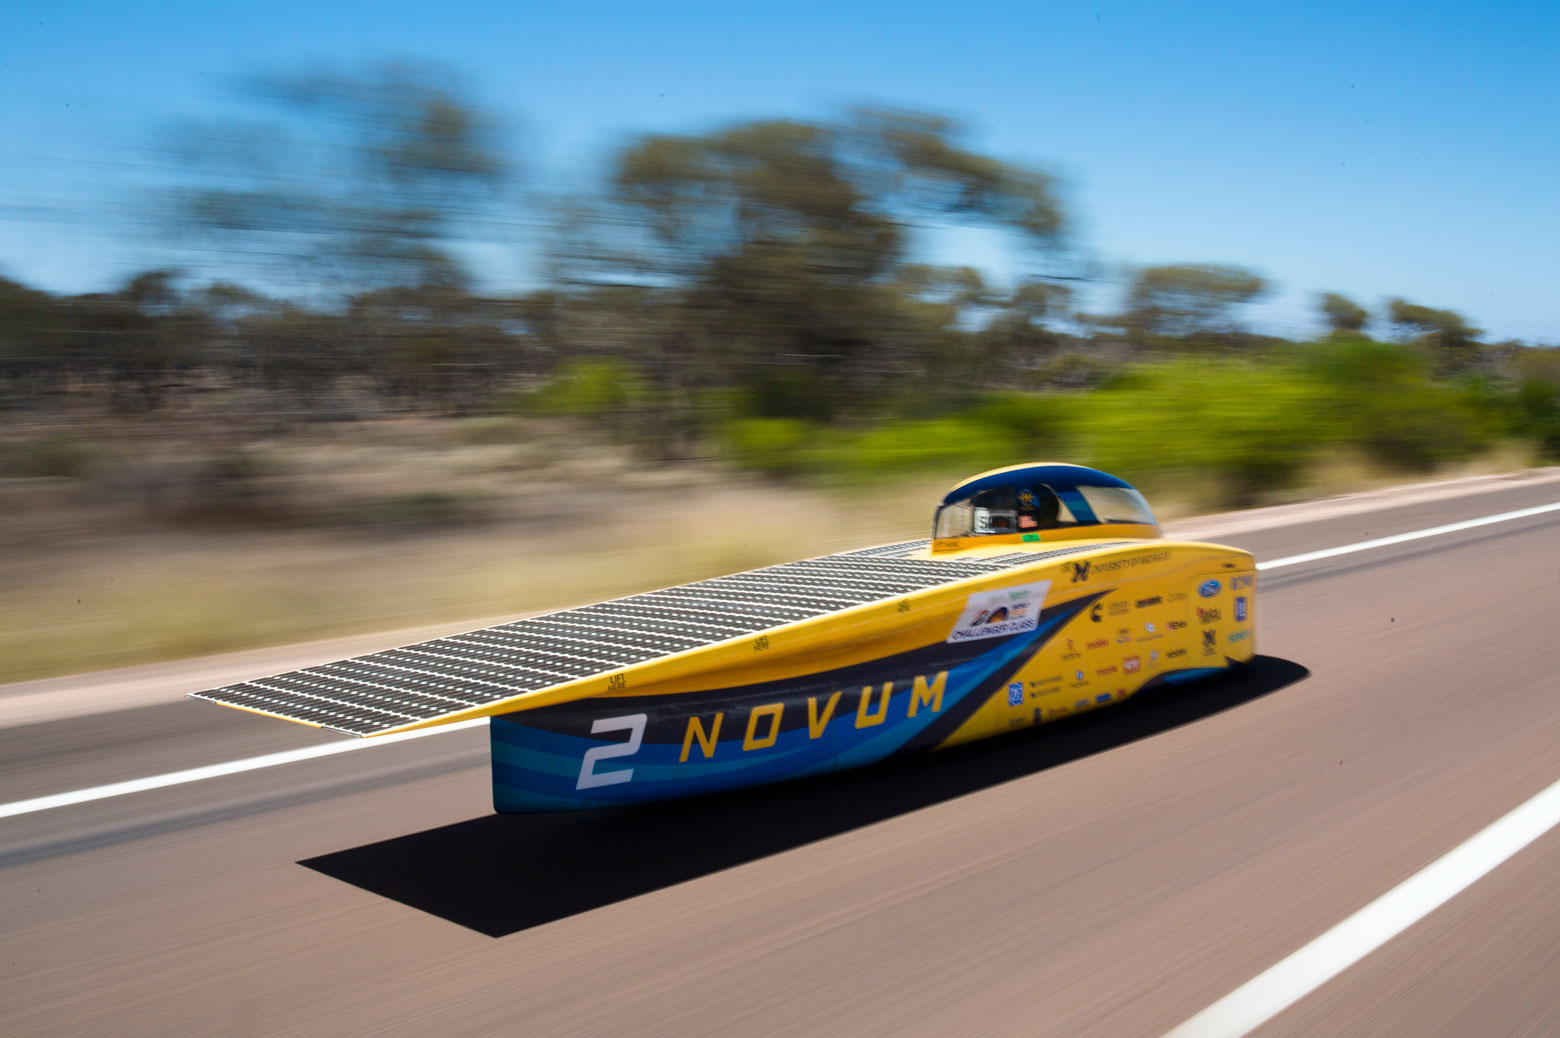 Solar car races down road in Australia